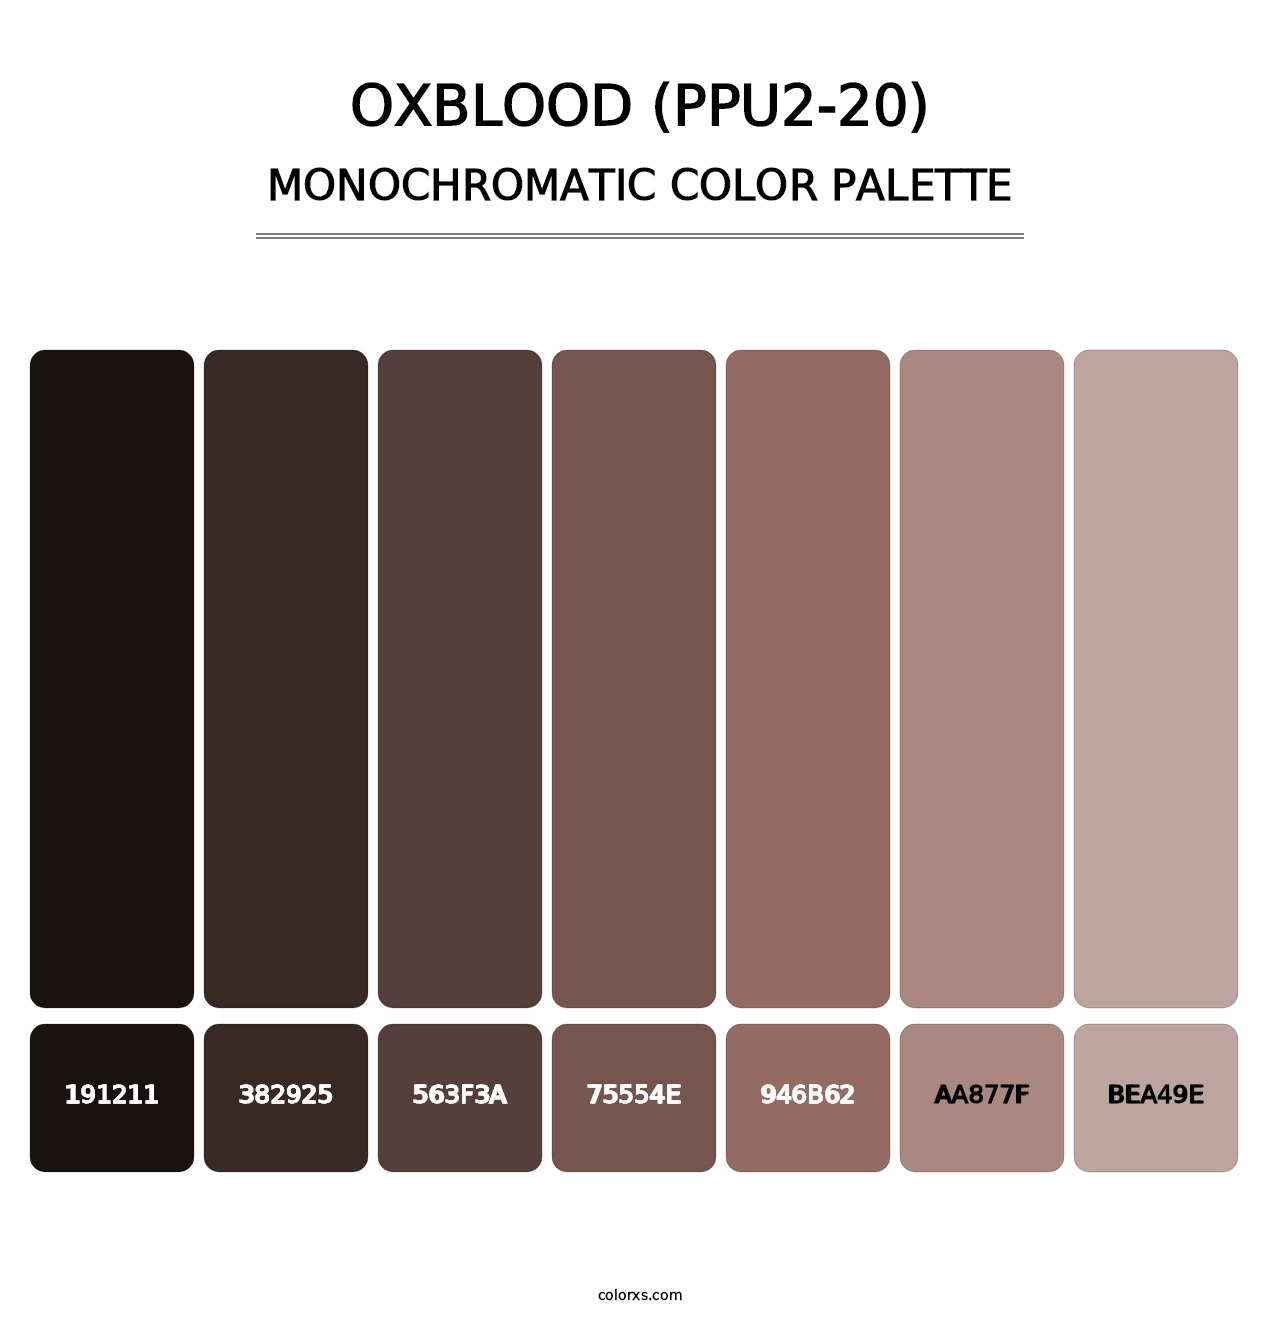 Oxblood (PPU2-20) - Monochromatic Color Palette